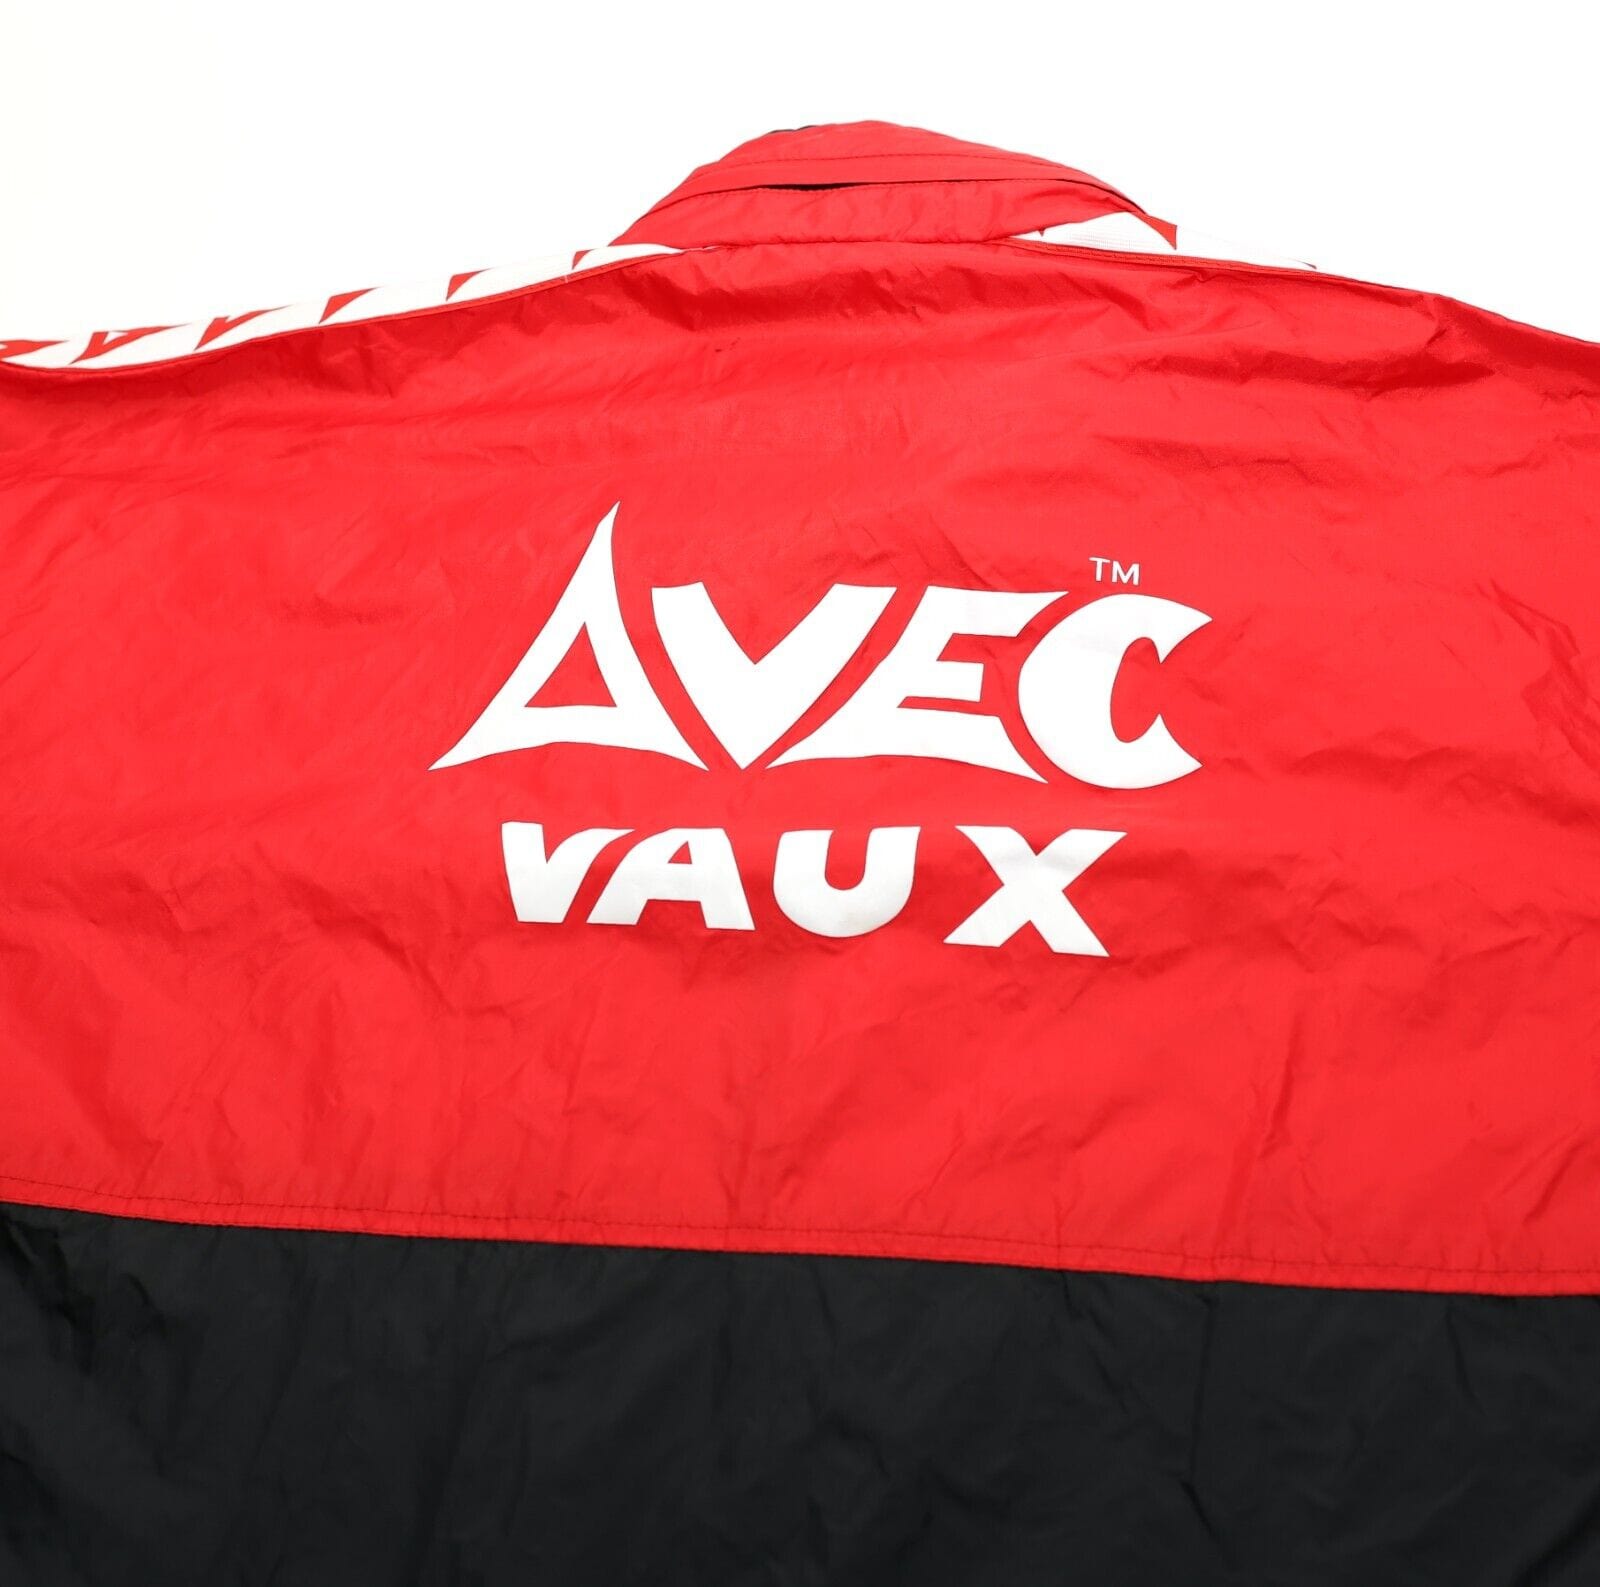 1996/97 SUNDERLAND Vintage Avec Football Training Rain Jacket Coat (S/M)